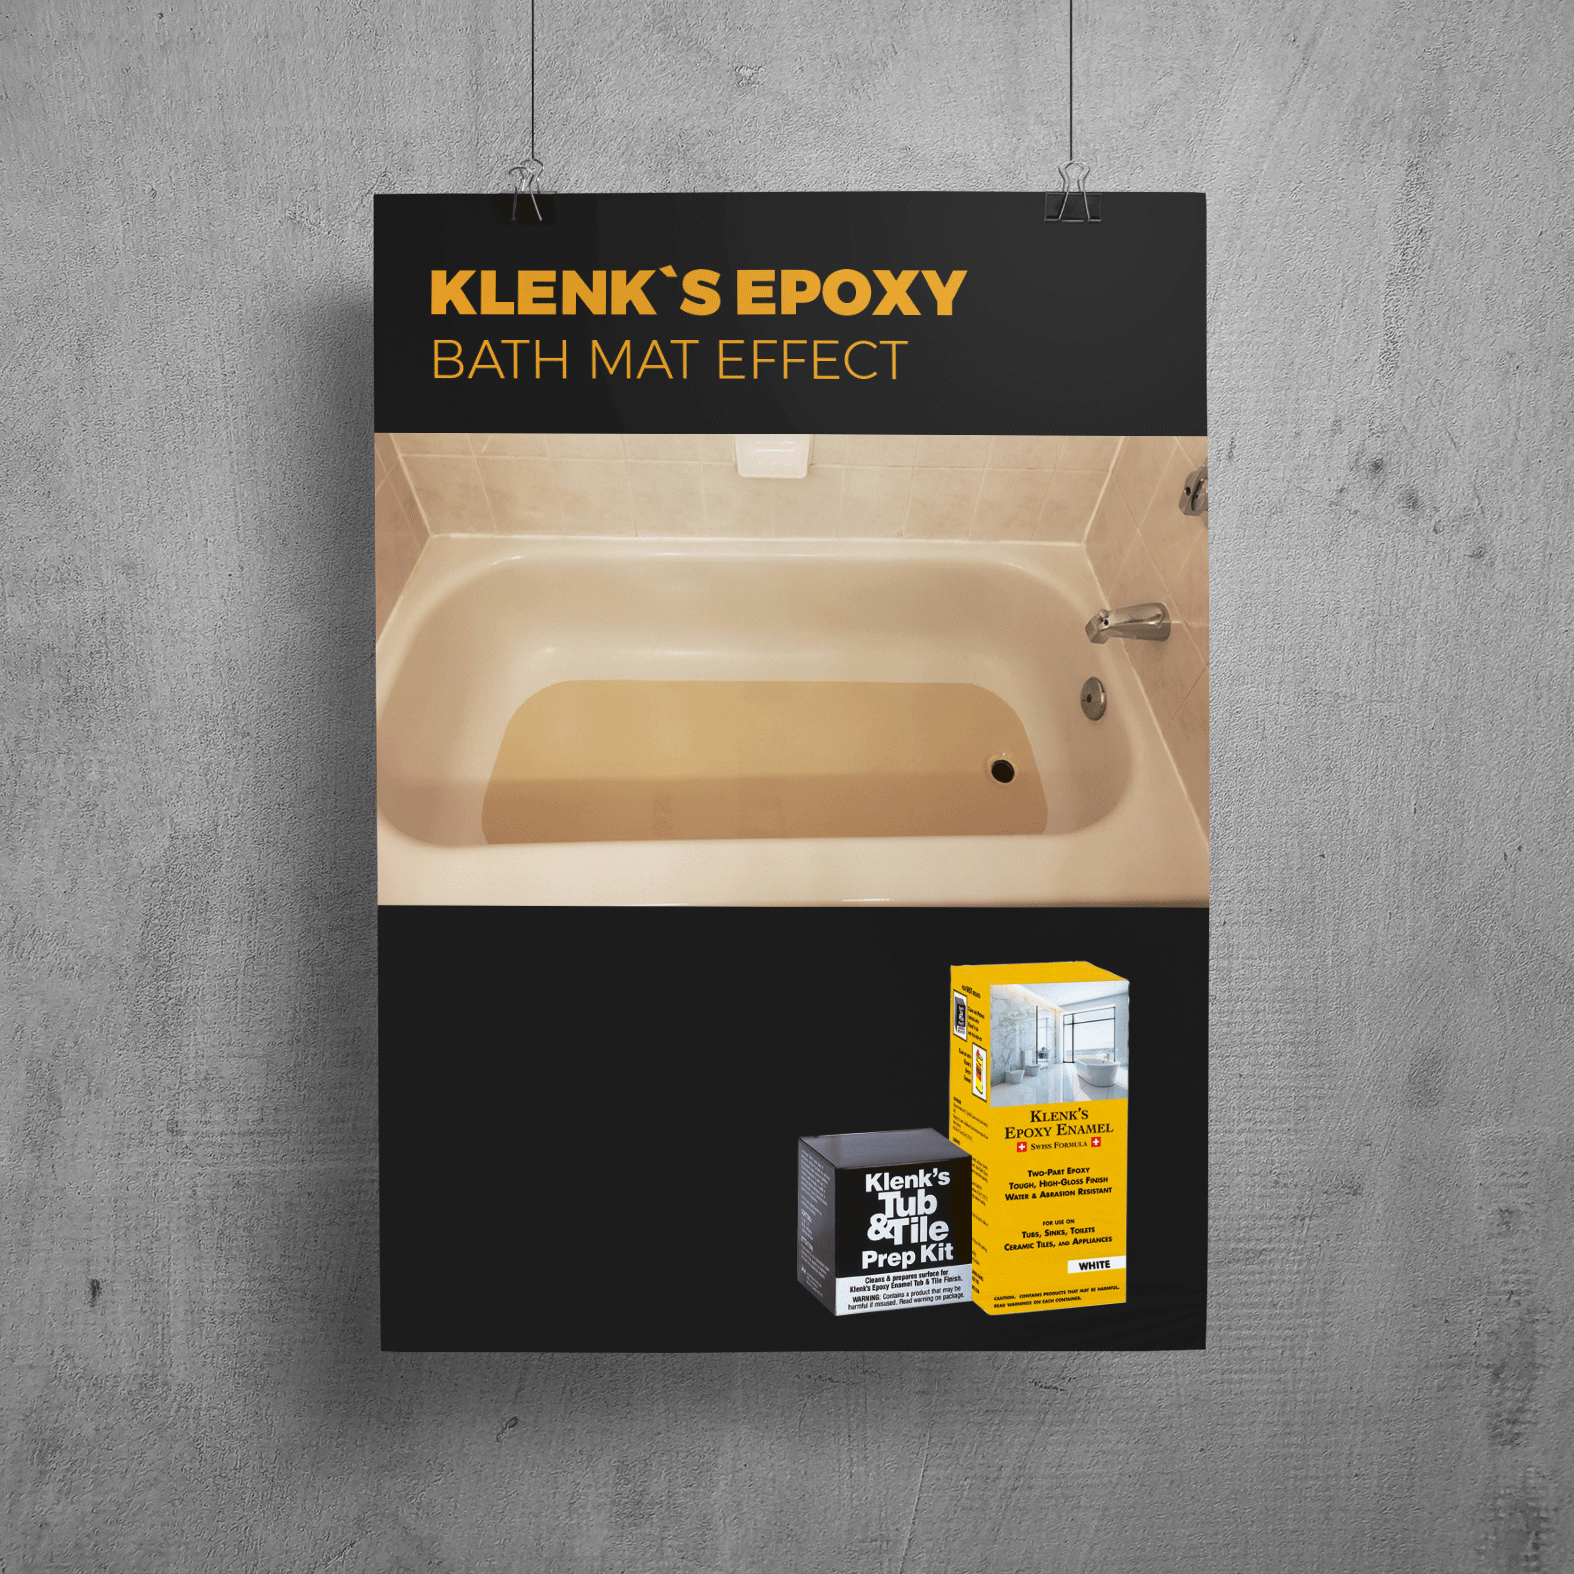 Klenk's Epoxy Bath Mat Effect